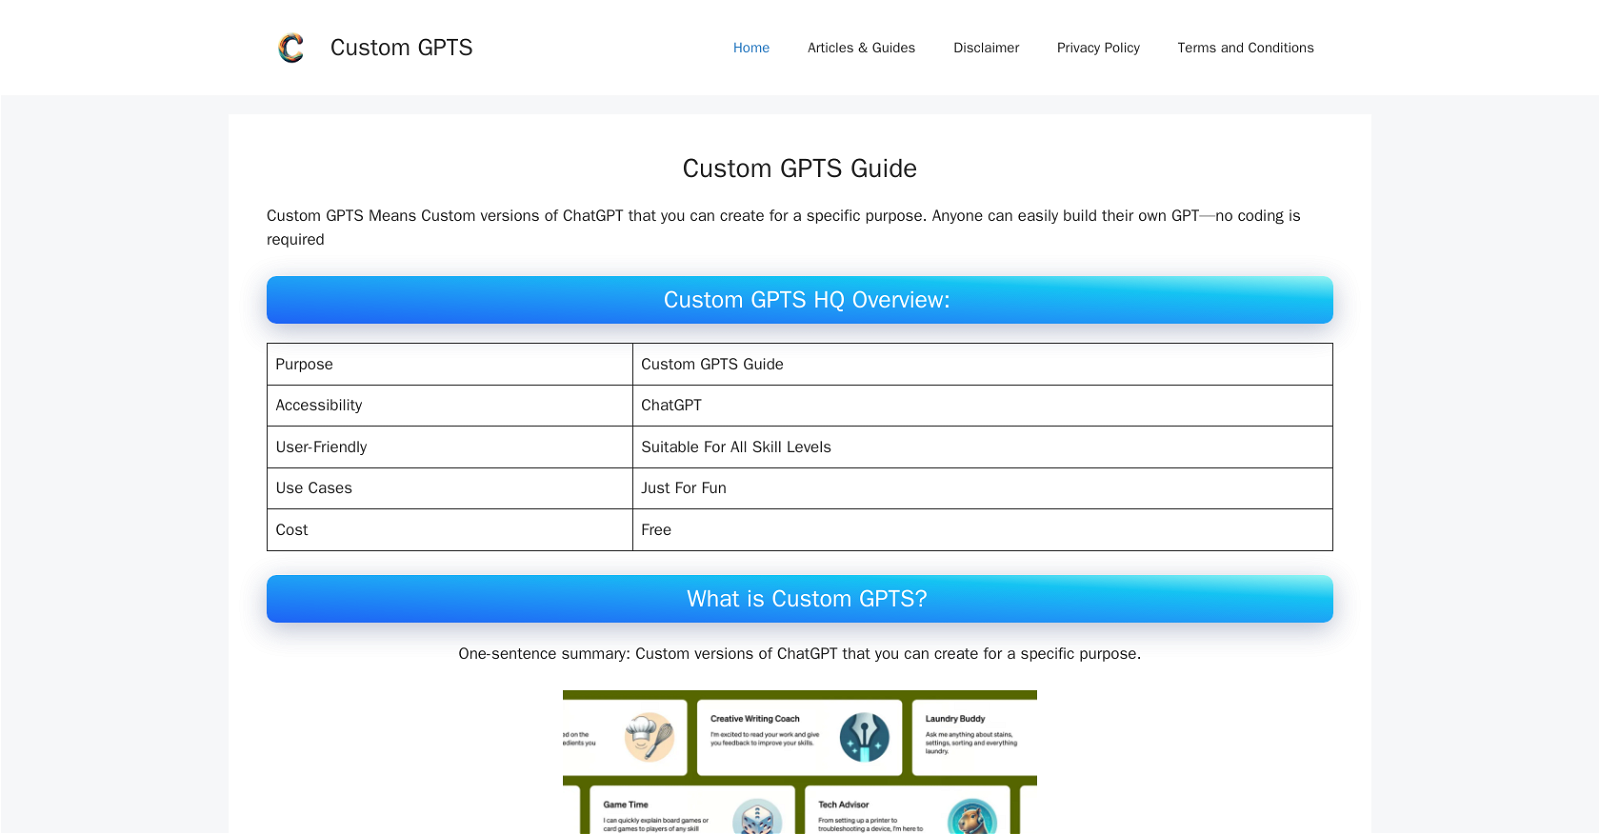 CustomGPTS website